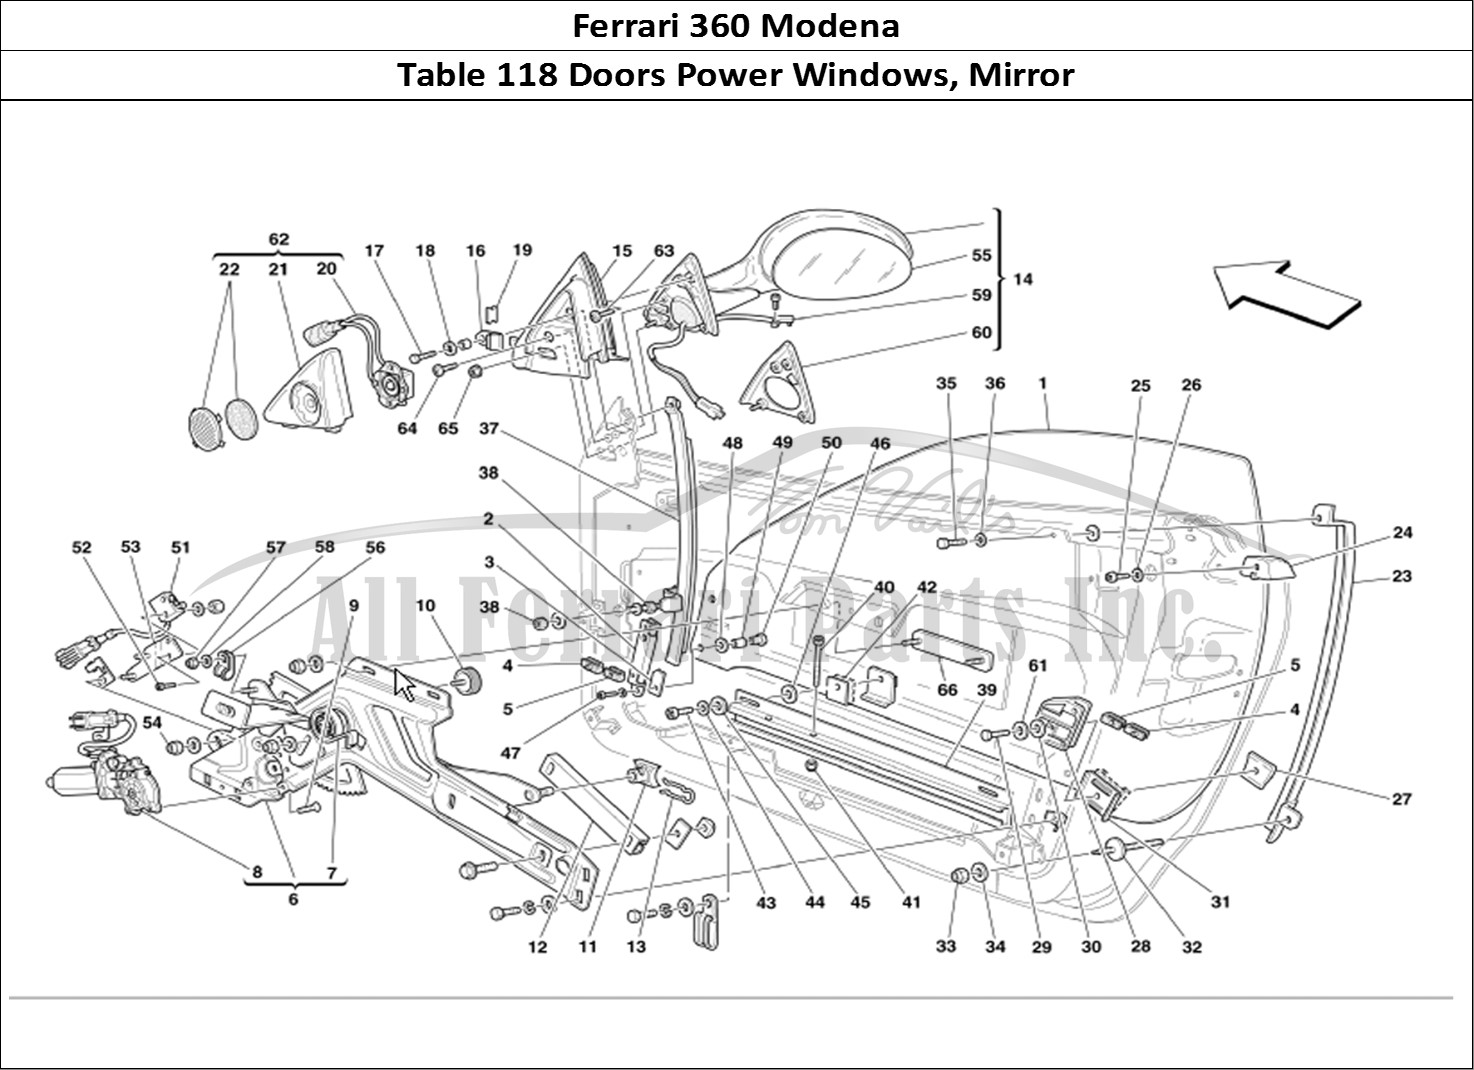 Ferrari Parts Ferrari 360 Modena Page 118 Doors Power Window and Re